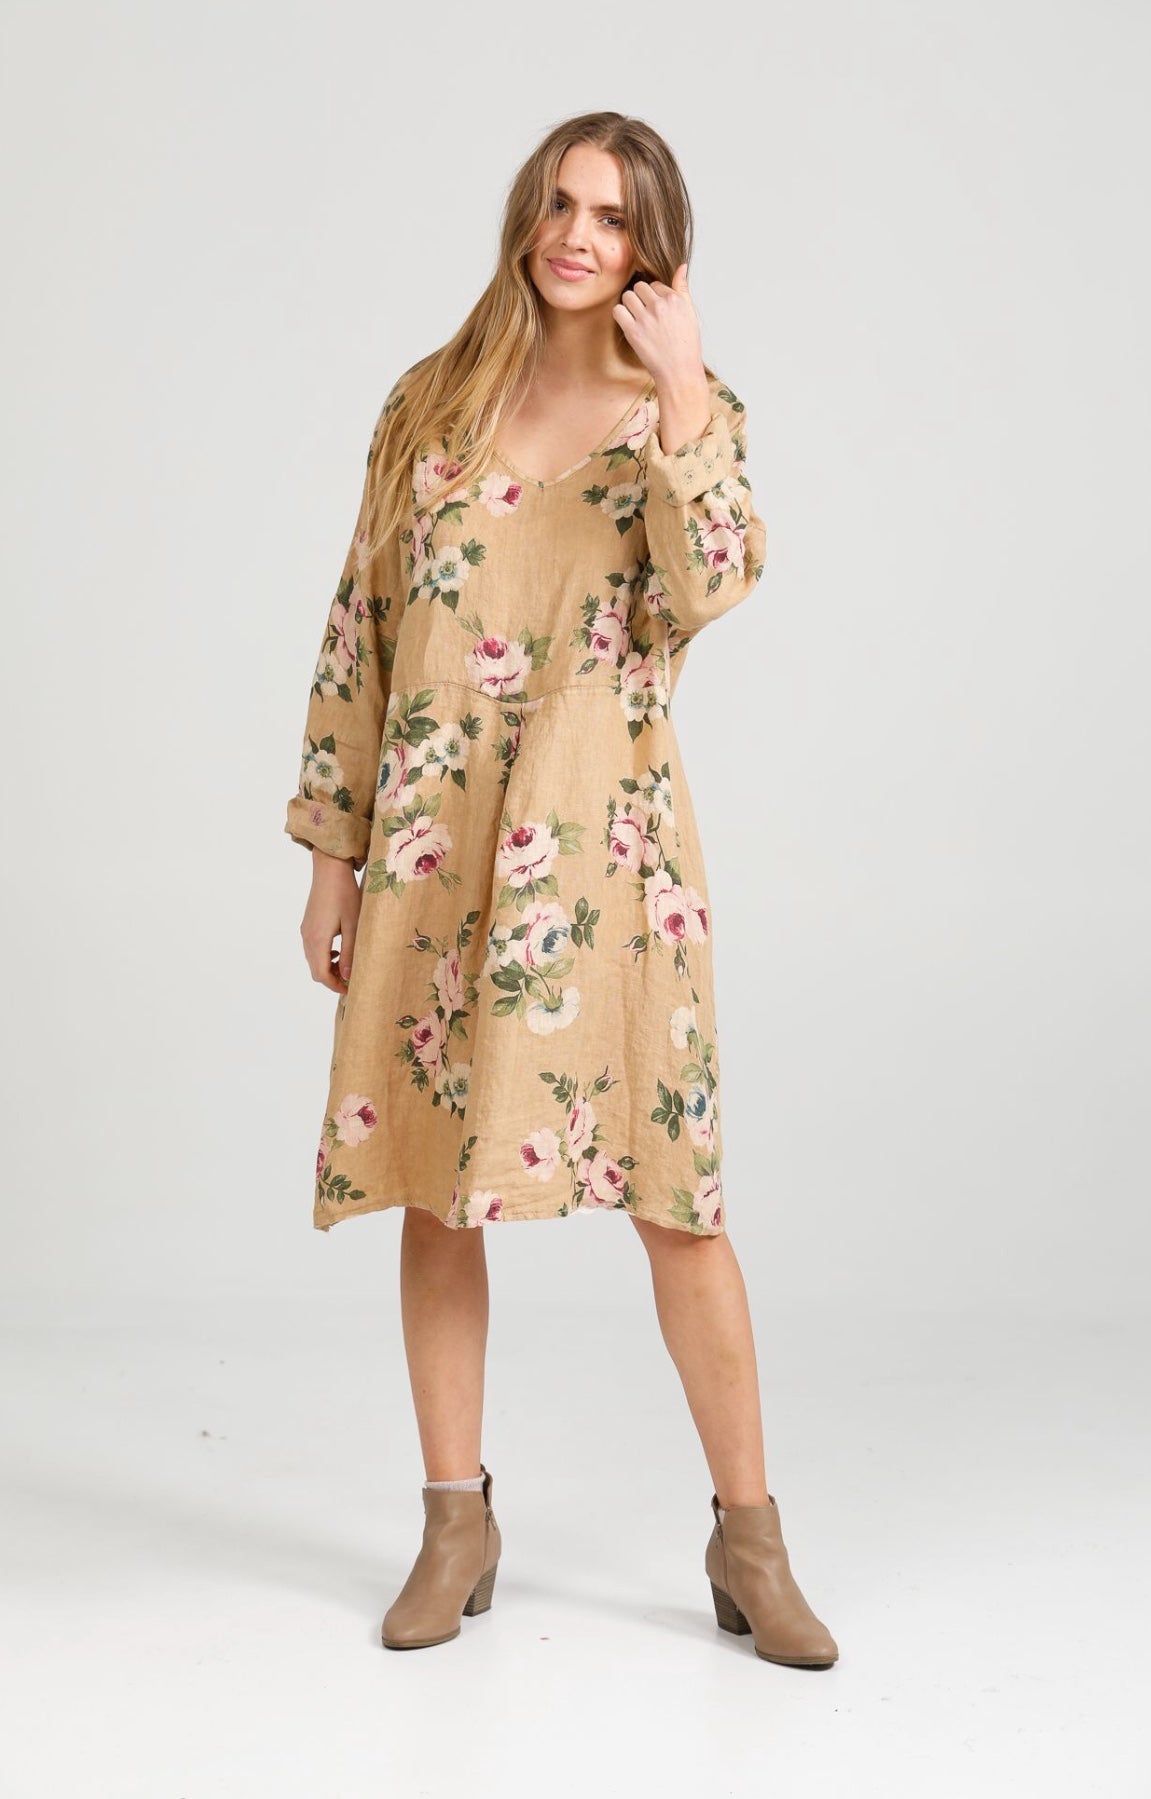 Amelia floral linen dress. Caramel